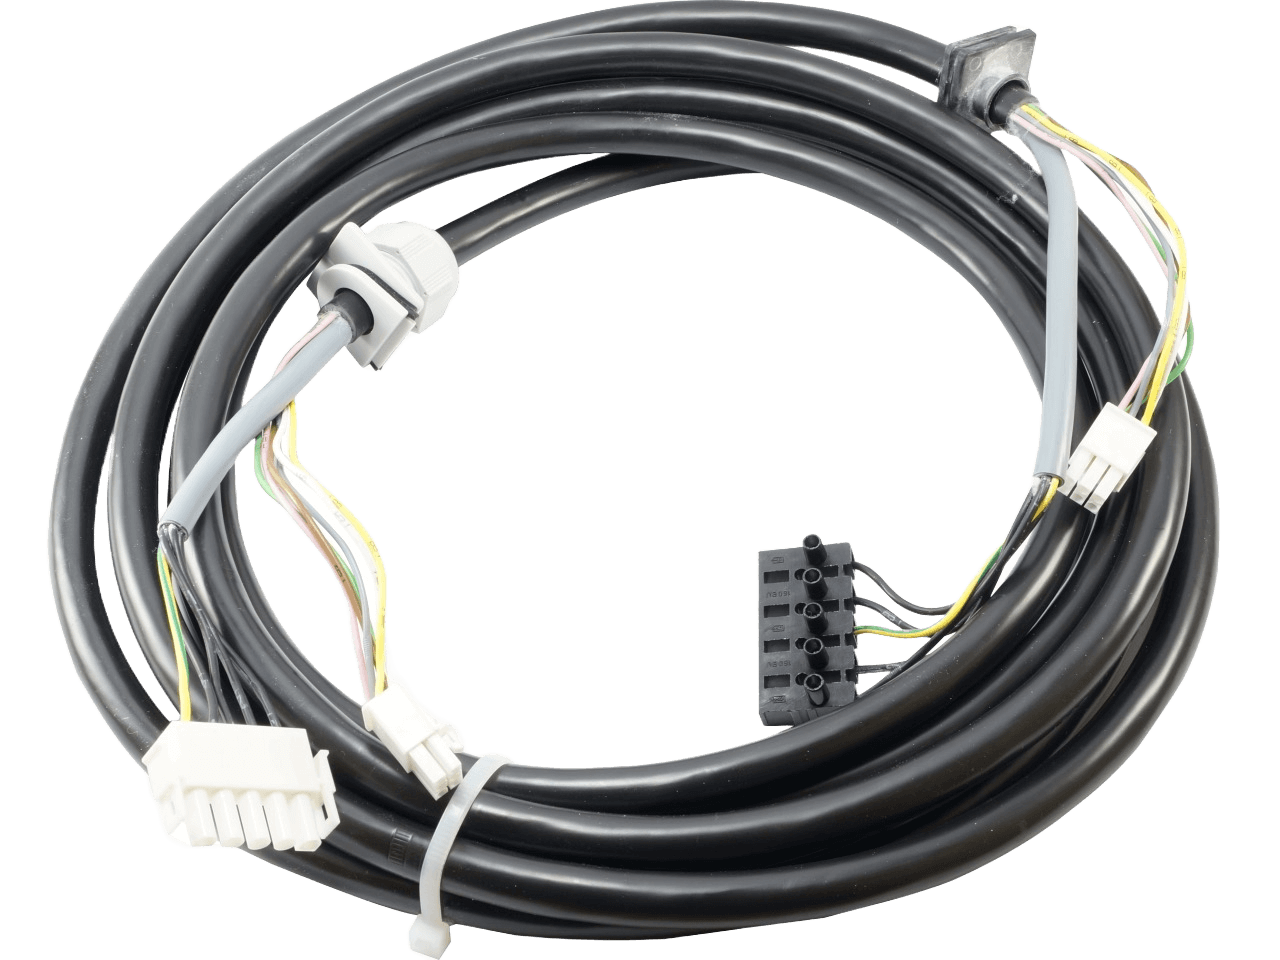 GfA Elektromaten NES Motor Cable for Control Units TS400 Length 3m